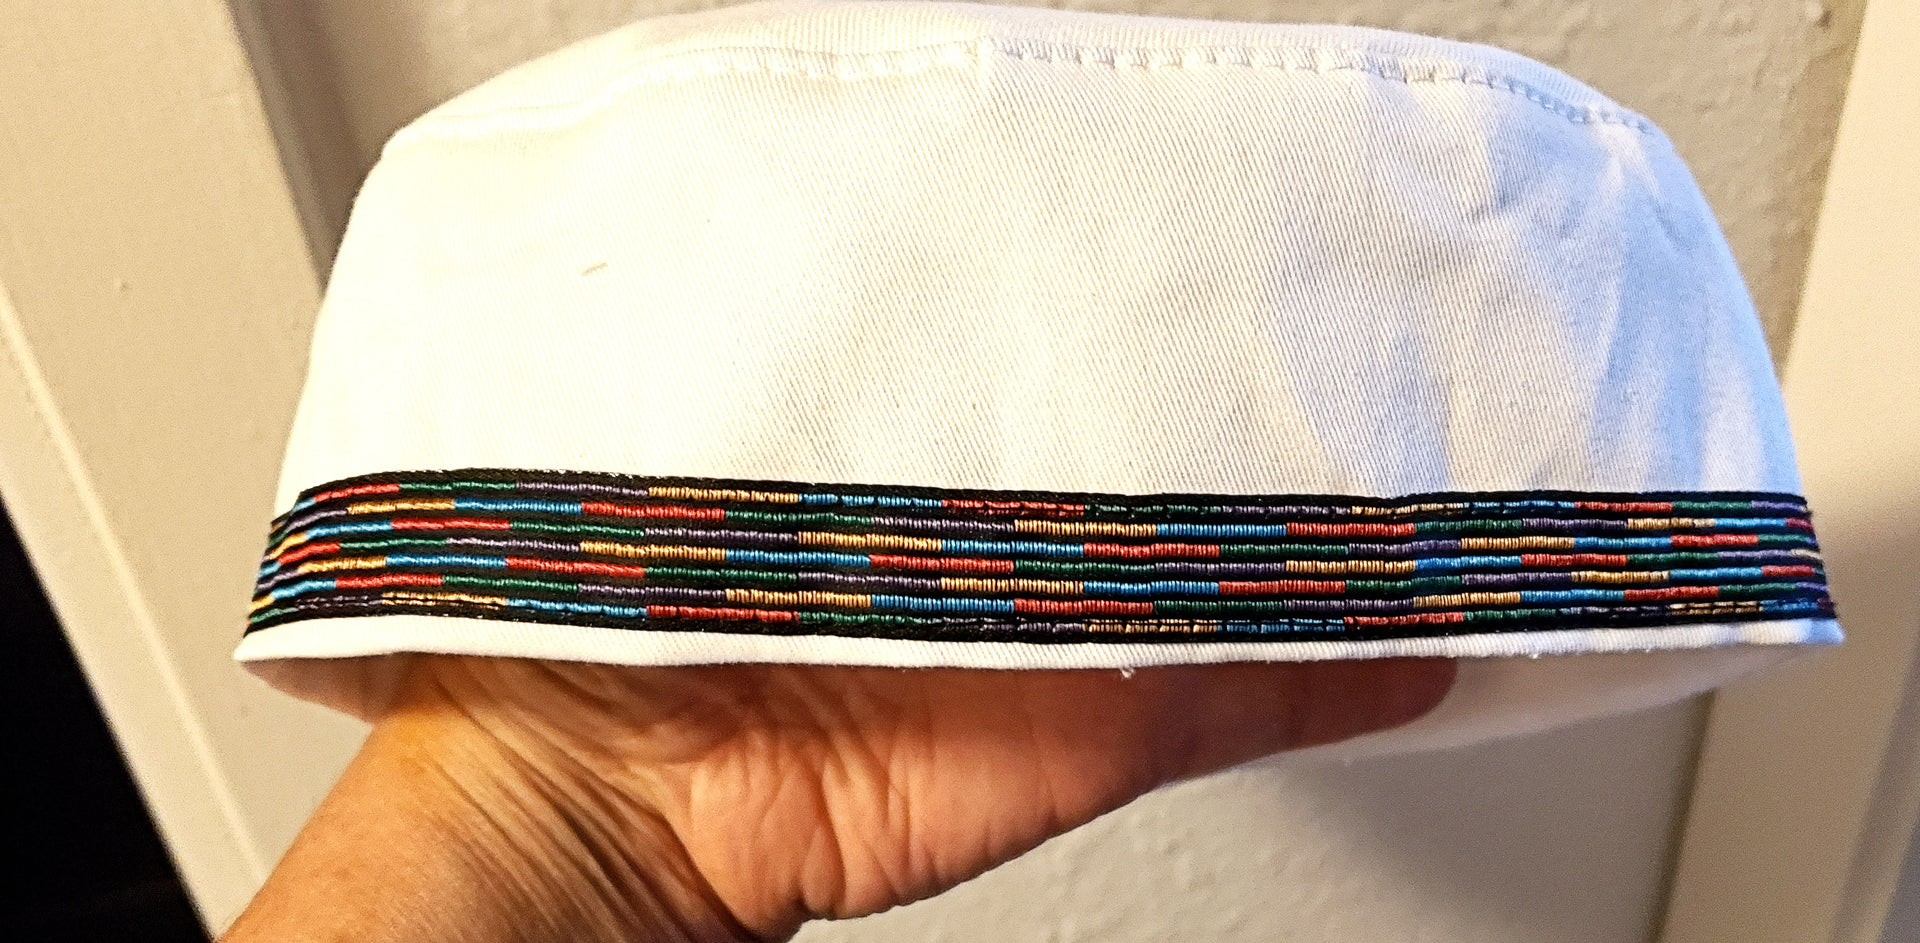 bucharian kippah with tapestry trim sephardic hat style yarmulke